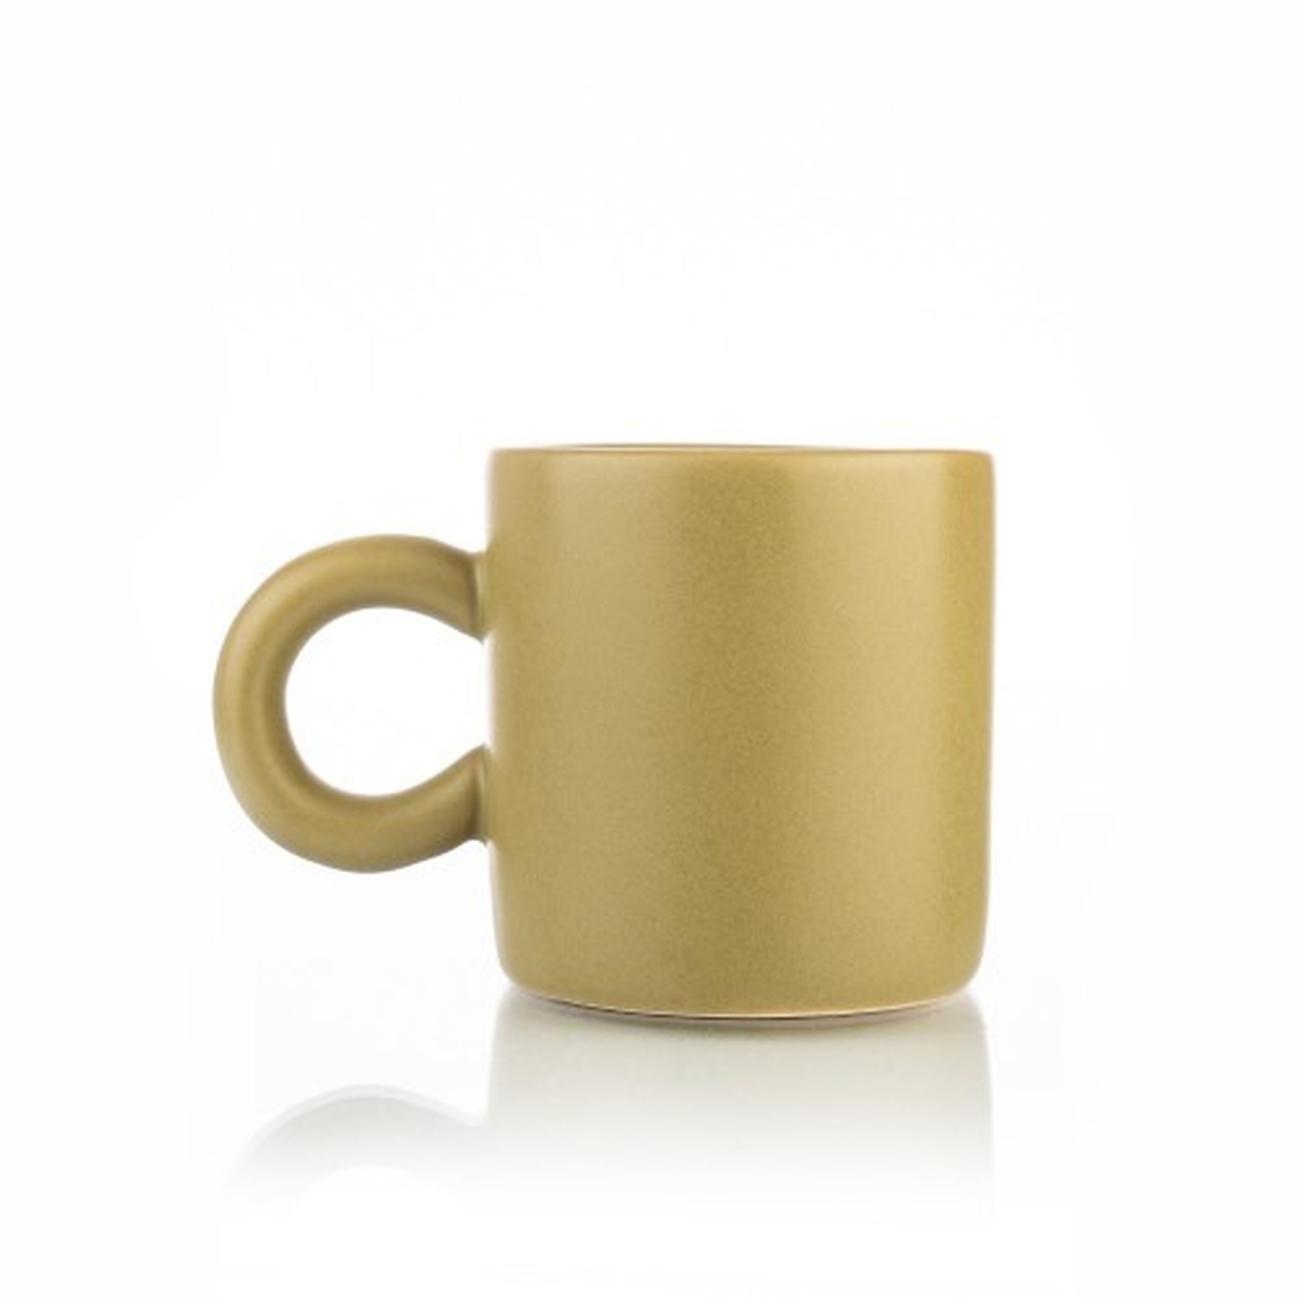 siip-matte-espresso-with-round-handle-olive - Siip Espresso Cup- Matte Olive With Round Handle